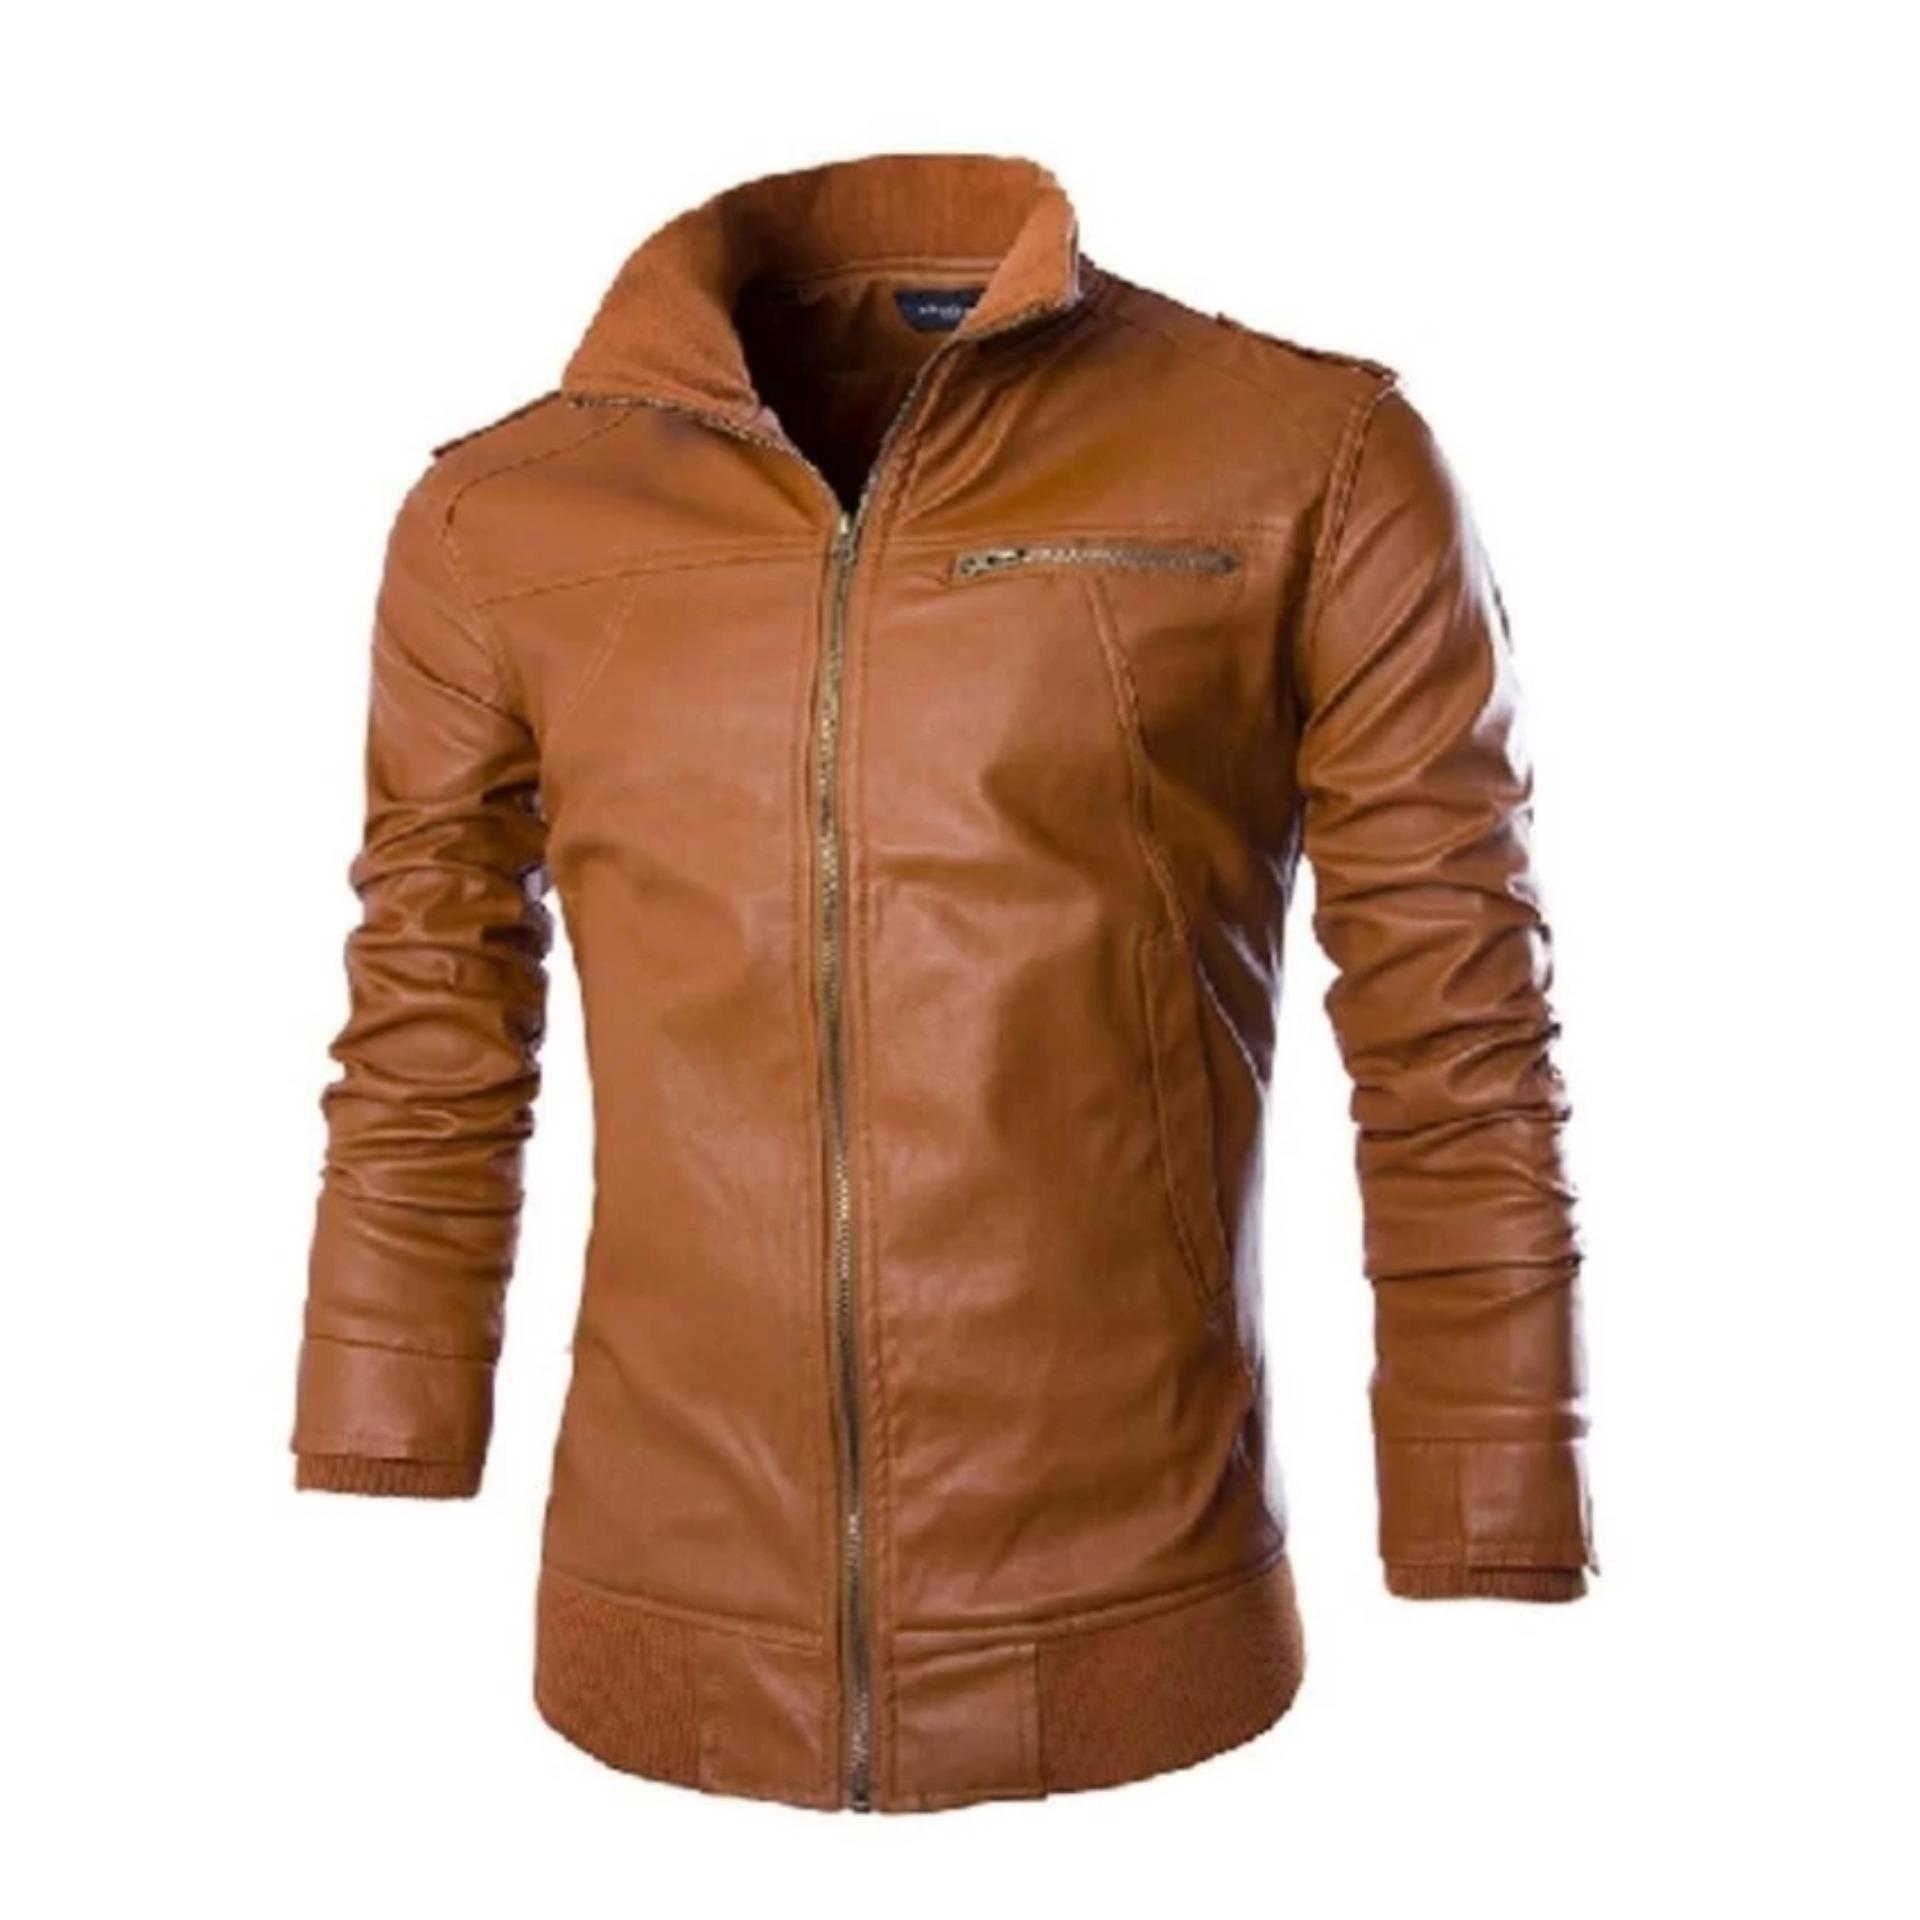 prada leather jacket mens price